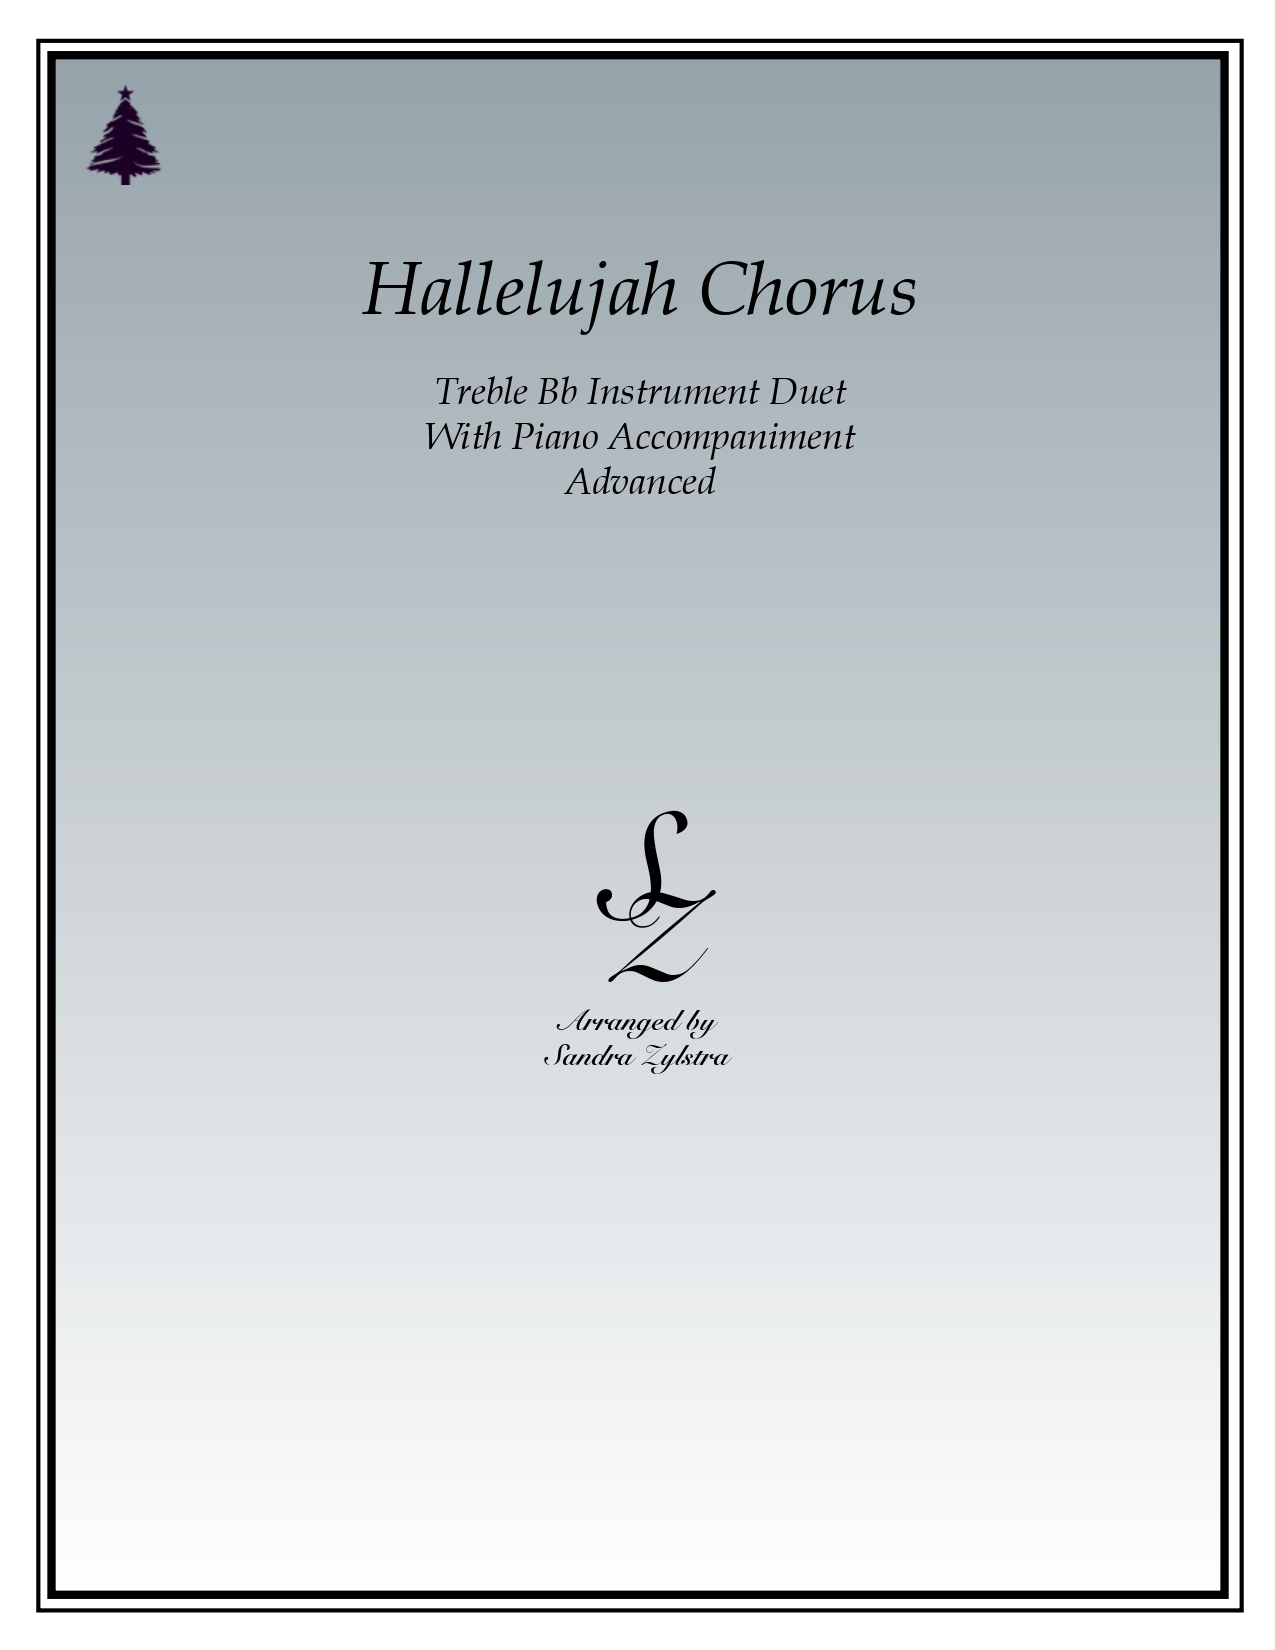 Hallelujah Chorus Bb instrument duet parts cover page 00011